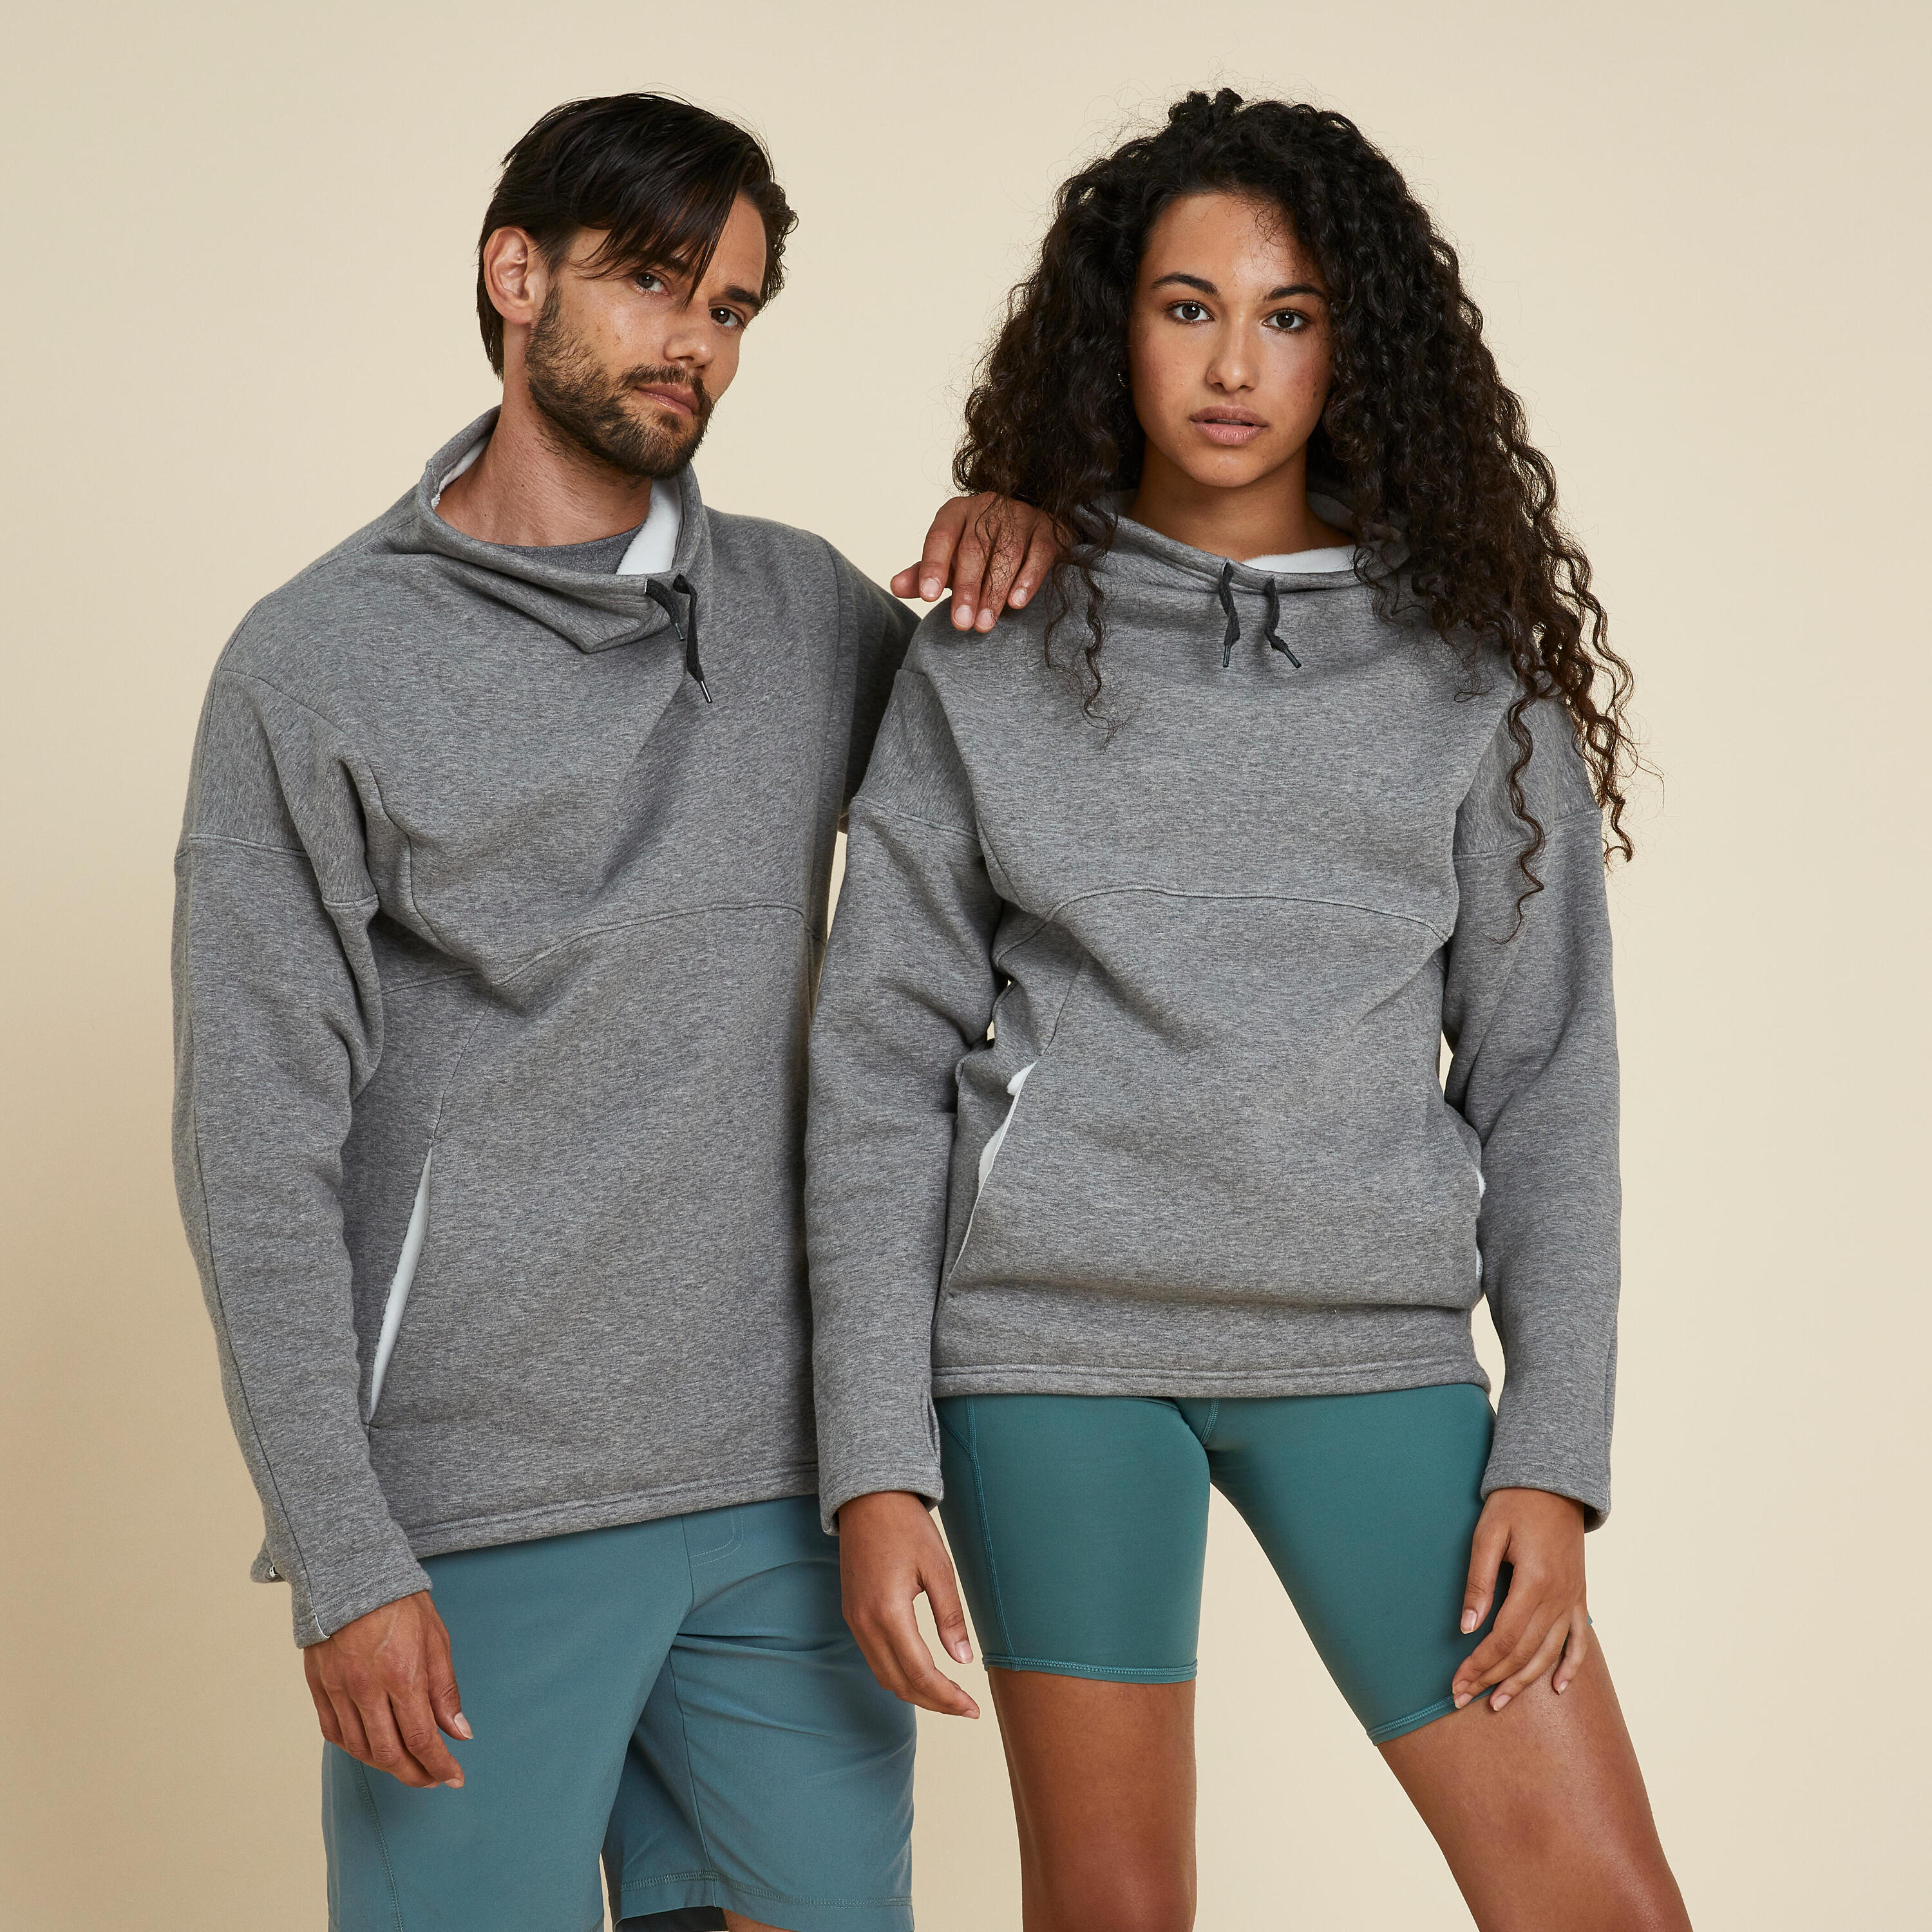 Unisex Yoga Warm Sweatshirt - Grey 1/11